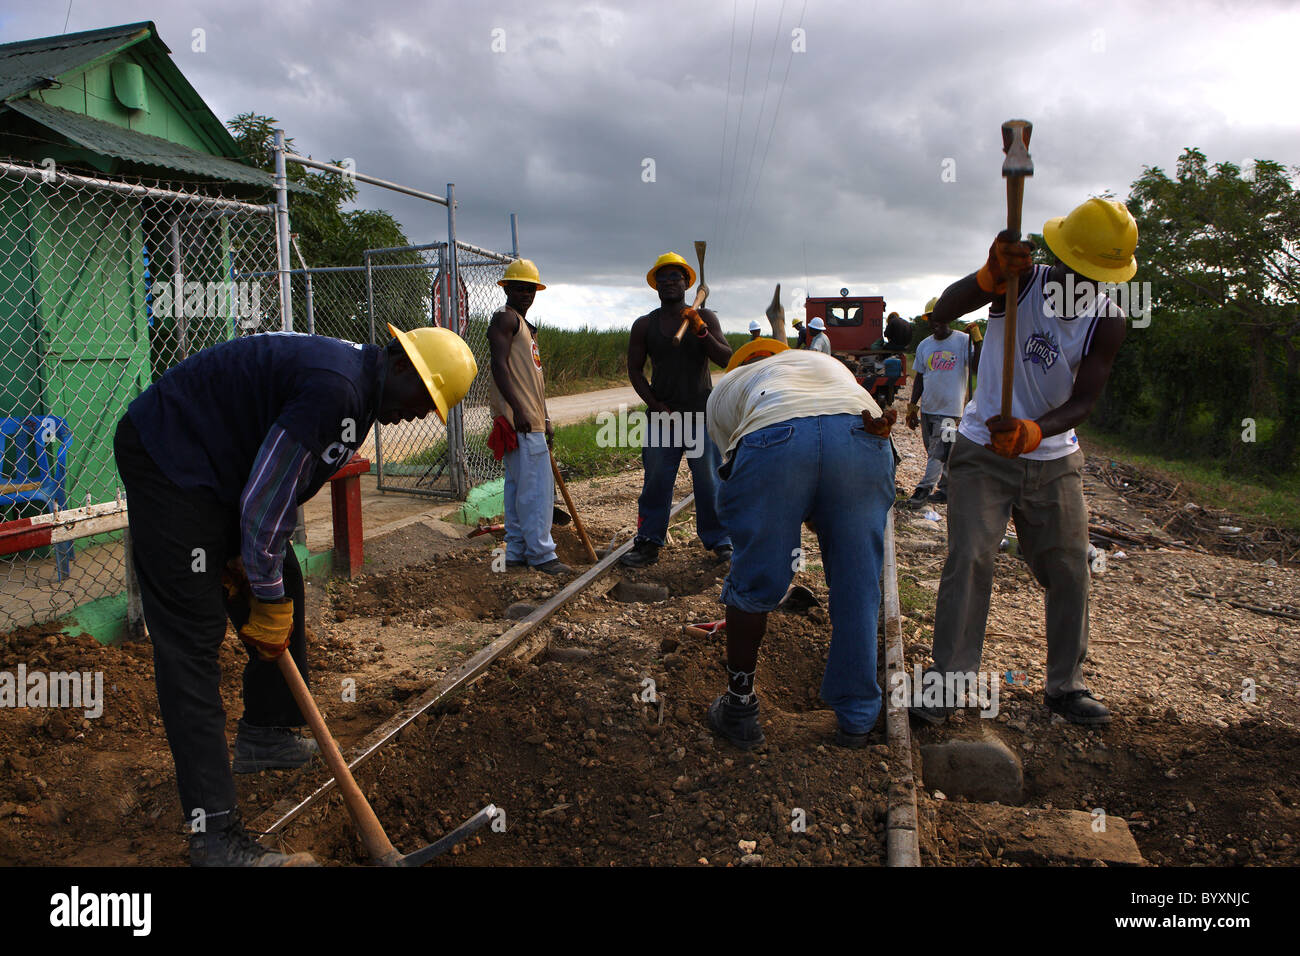 Caribbean, Dominican Republic, men at work, rail transport sugarcane Stock Photo